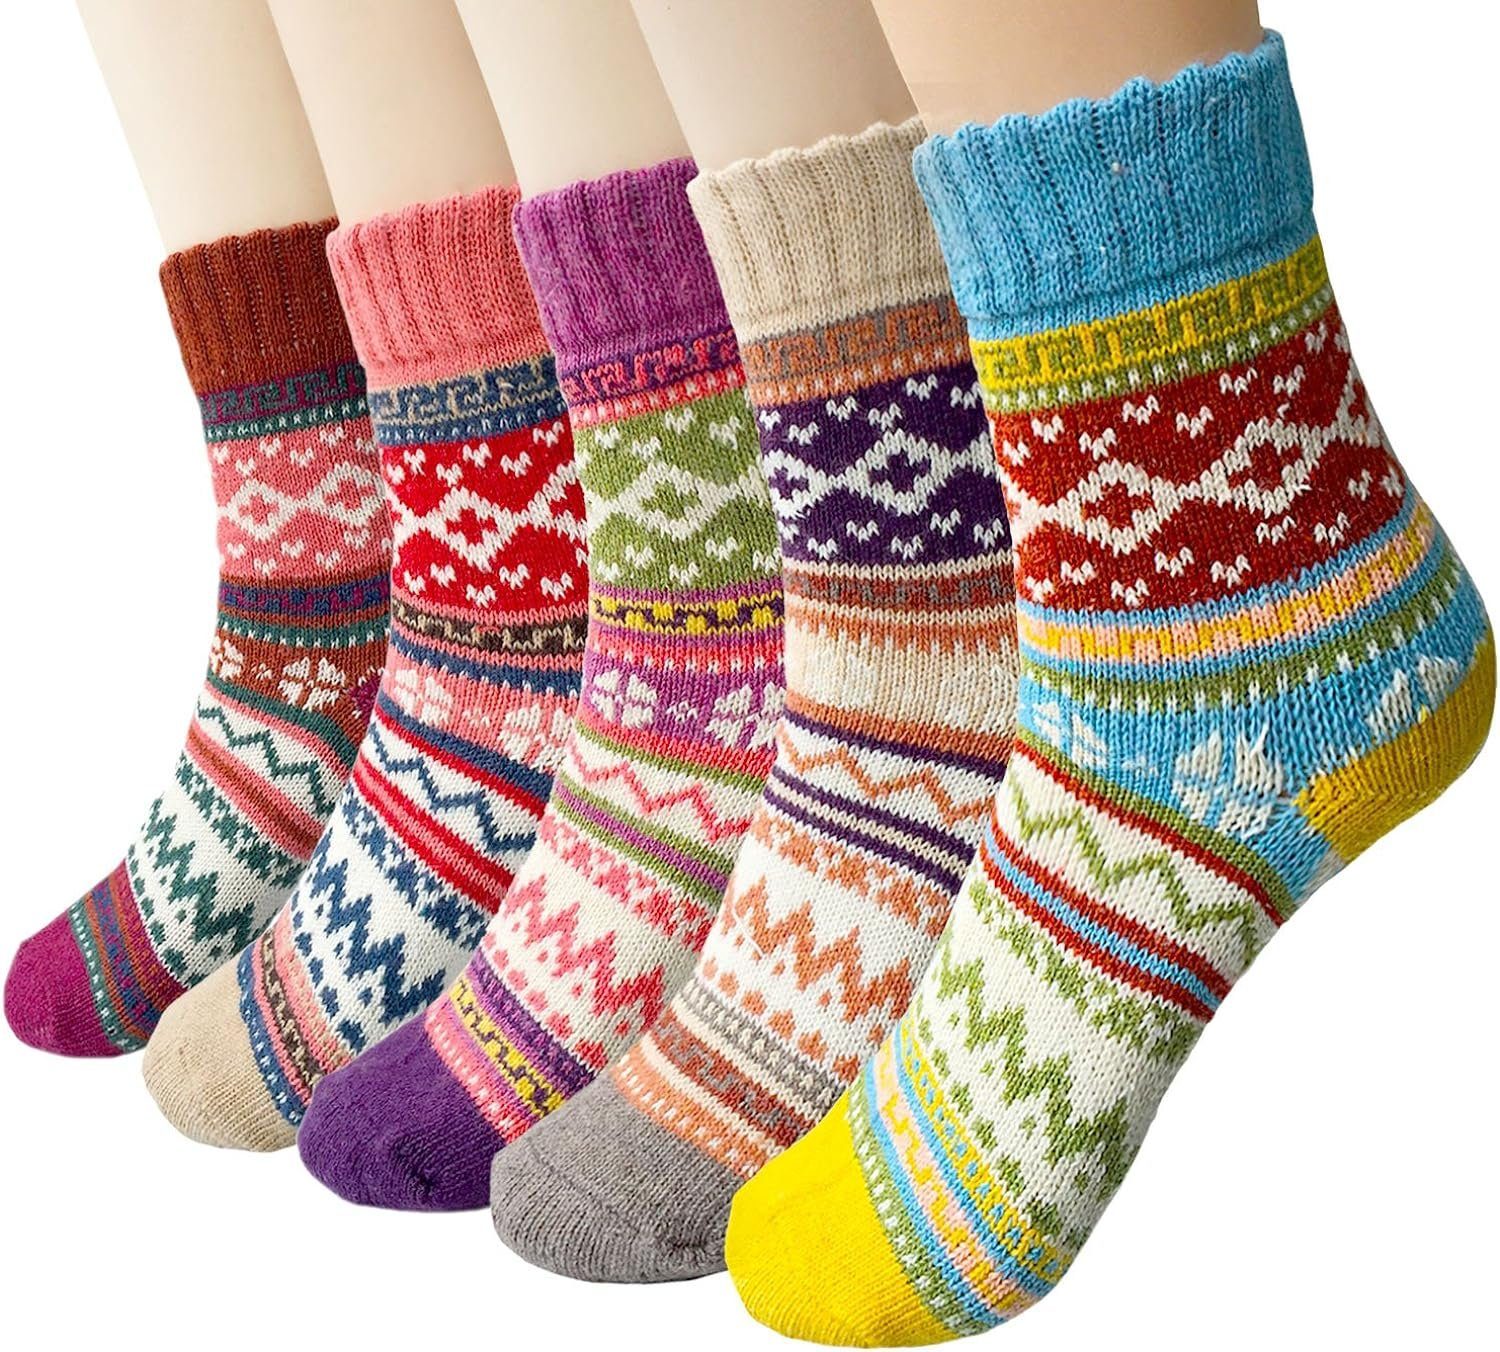 5 Haussocken, Herz A0494 Paar Kuschelsocken für Damen Warme Socken Winter bunt, Kuschelsocken Alster kuschelig warme